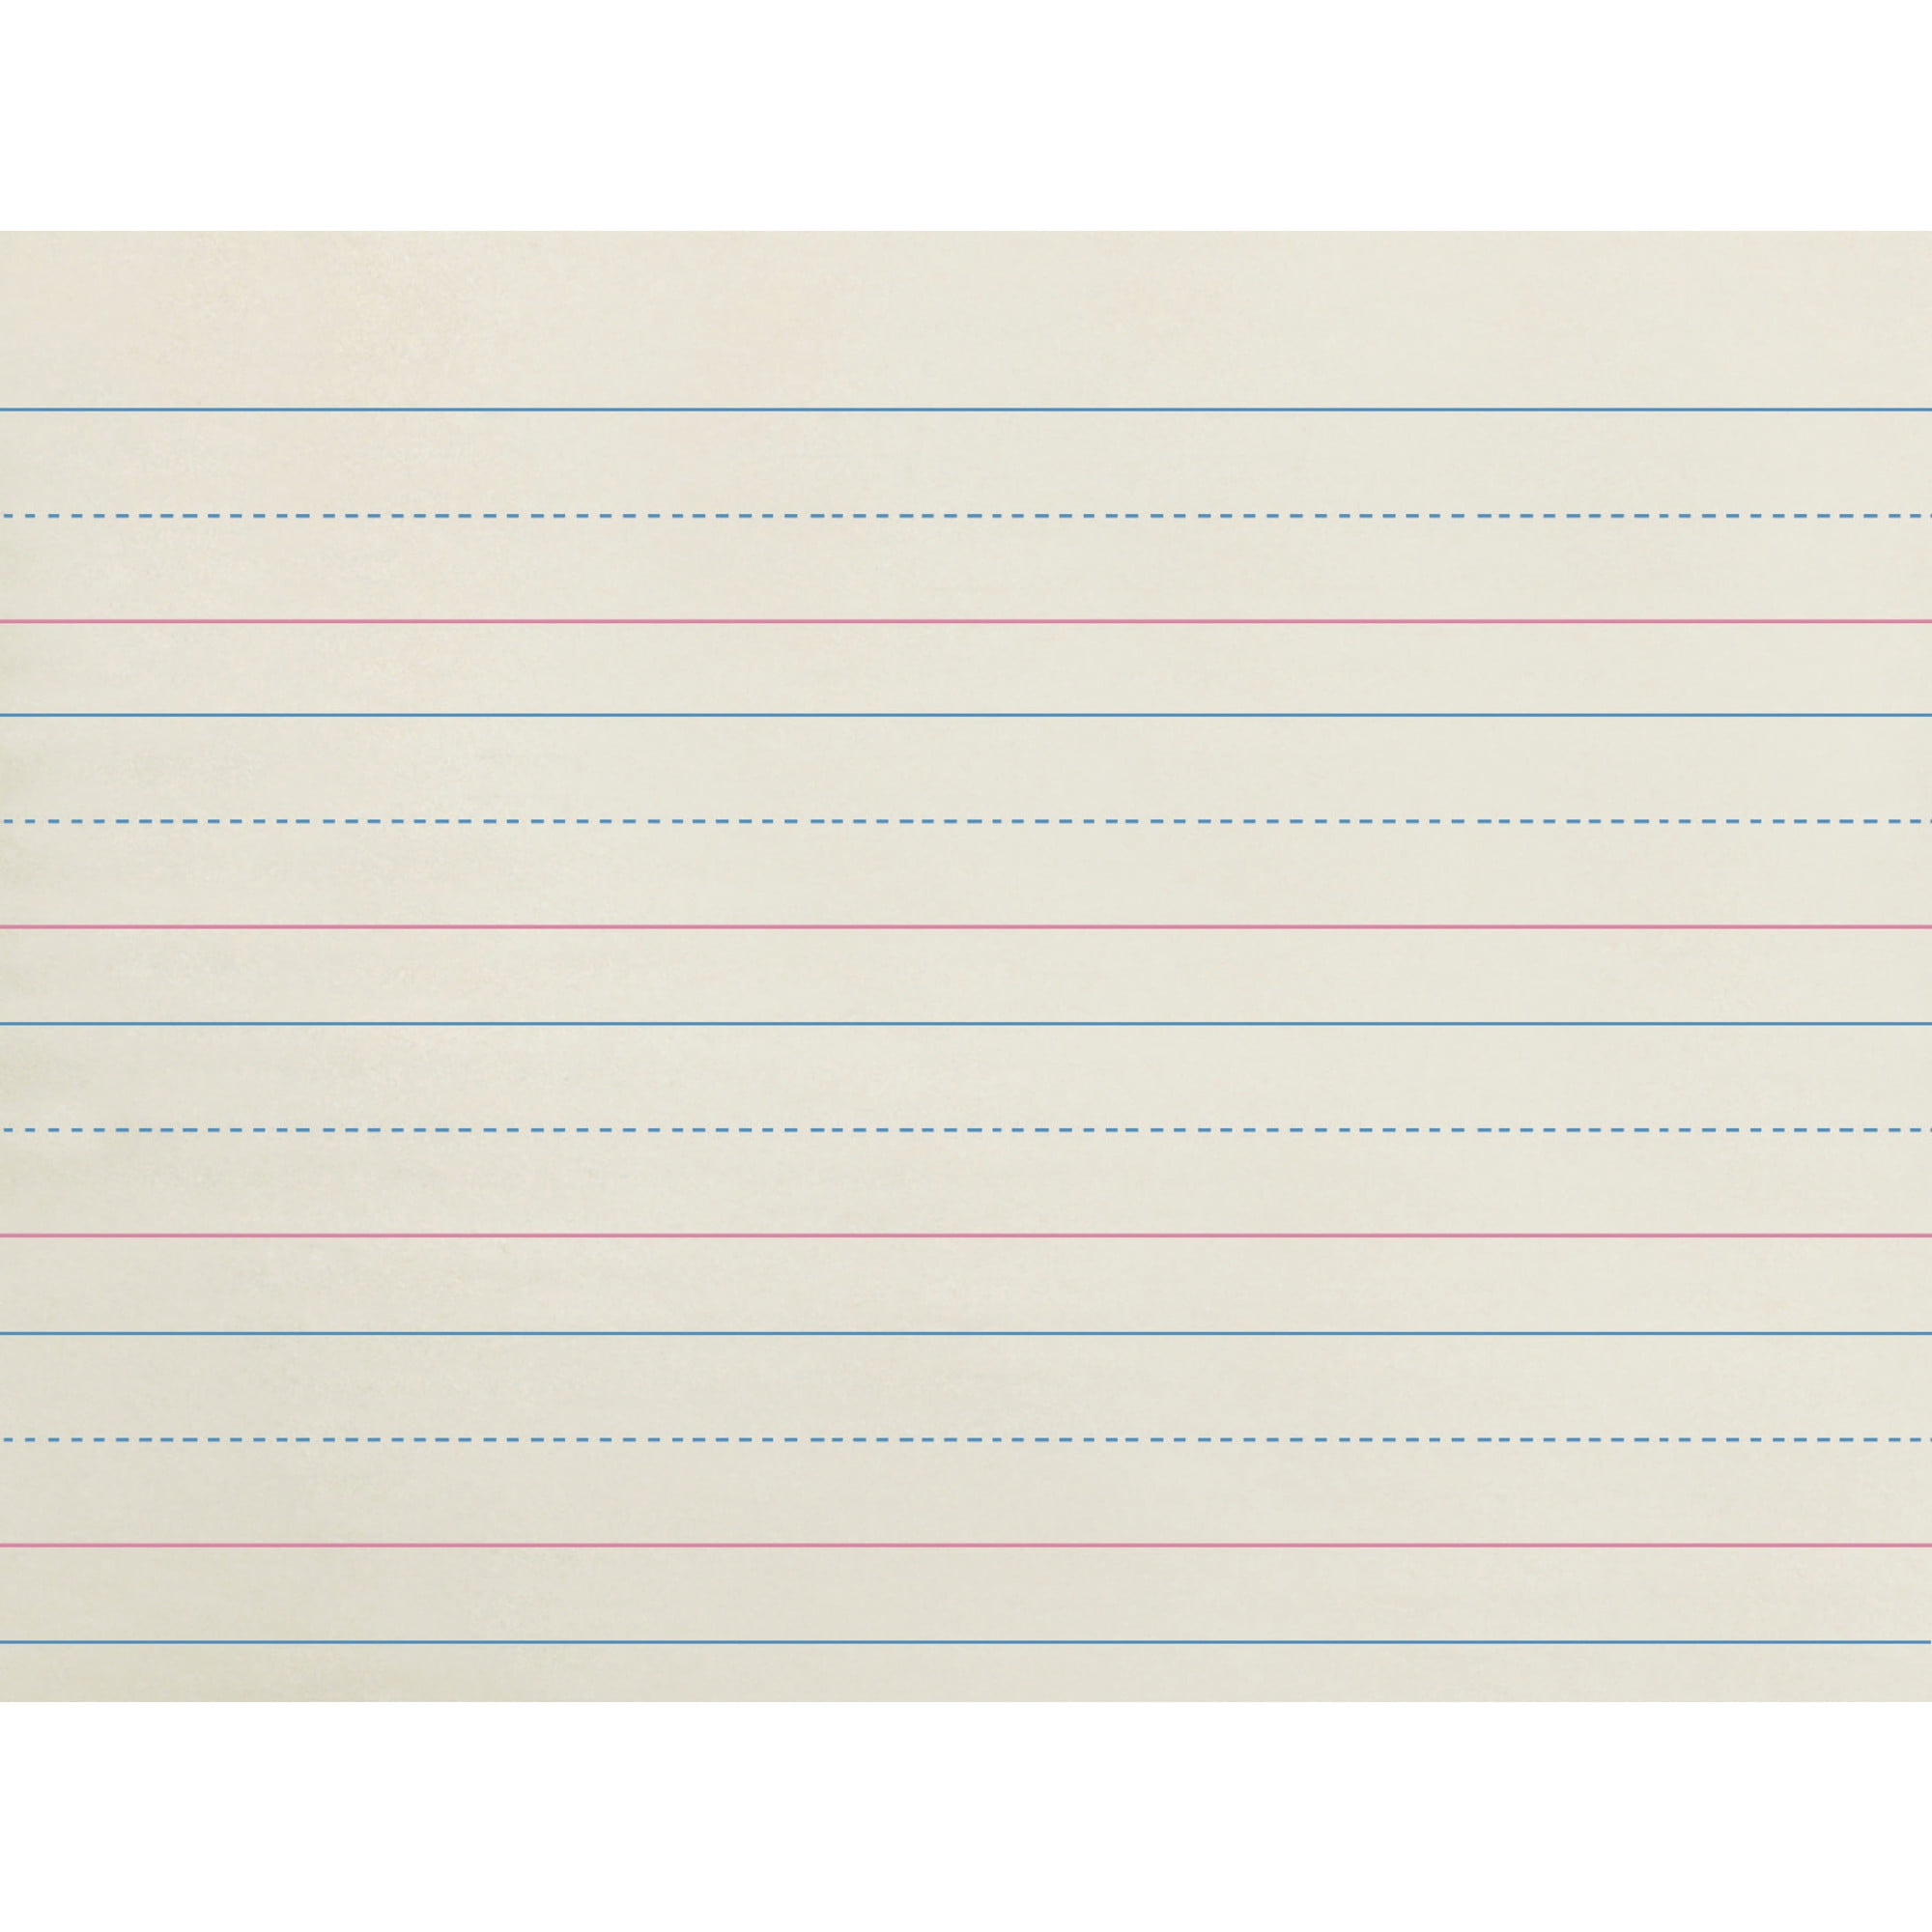 Sulphite Handwriting Paper, Dotted Midline, Grade 1, 5/8 x 5/16